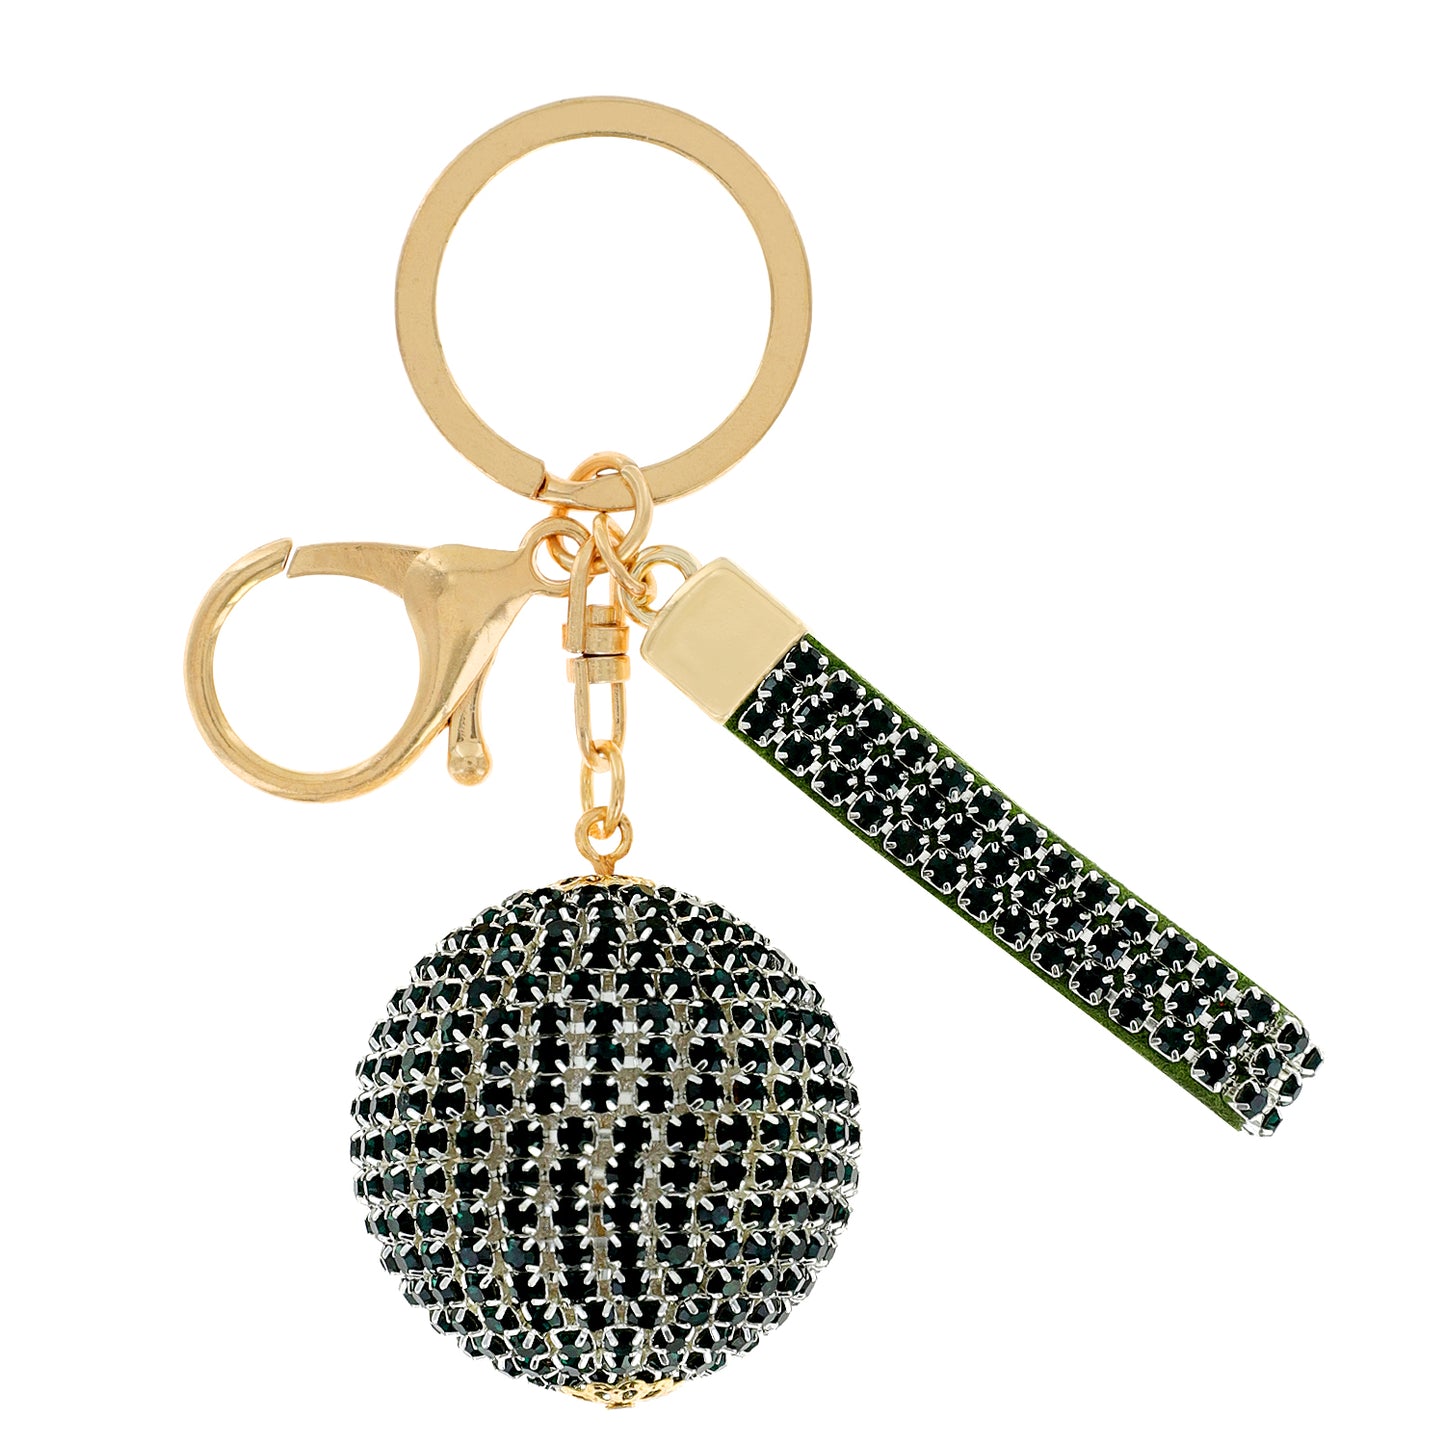 Rhinestone Ball Key Chain with Wristlet - Green